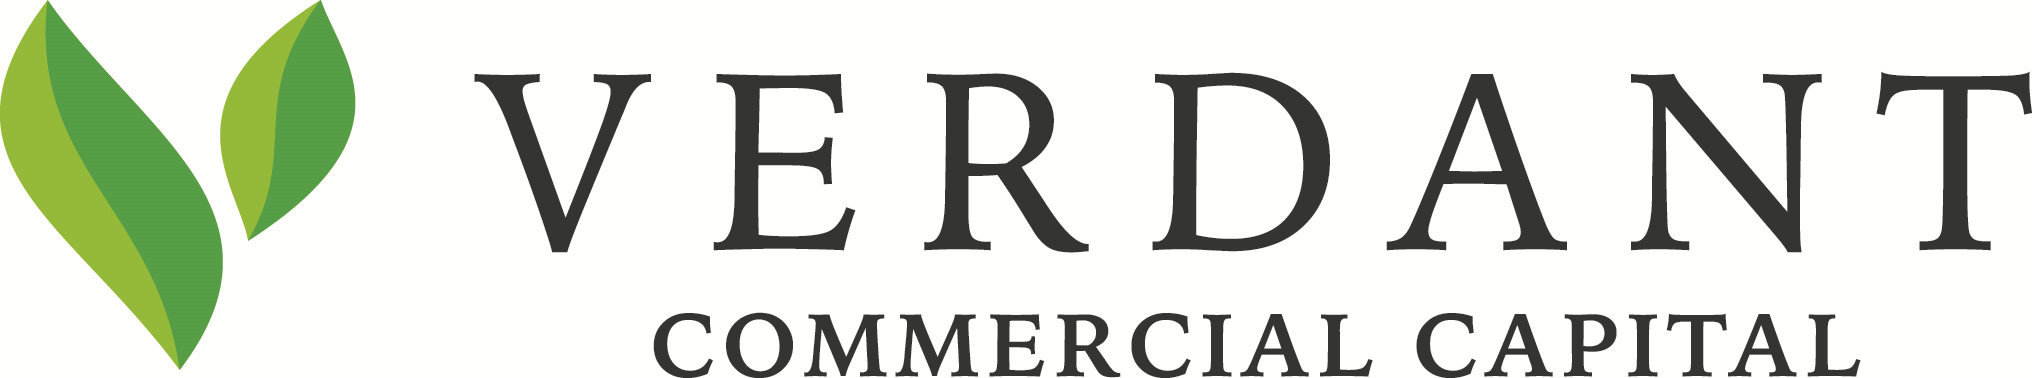 Verdant Commercial Capital Company Logo